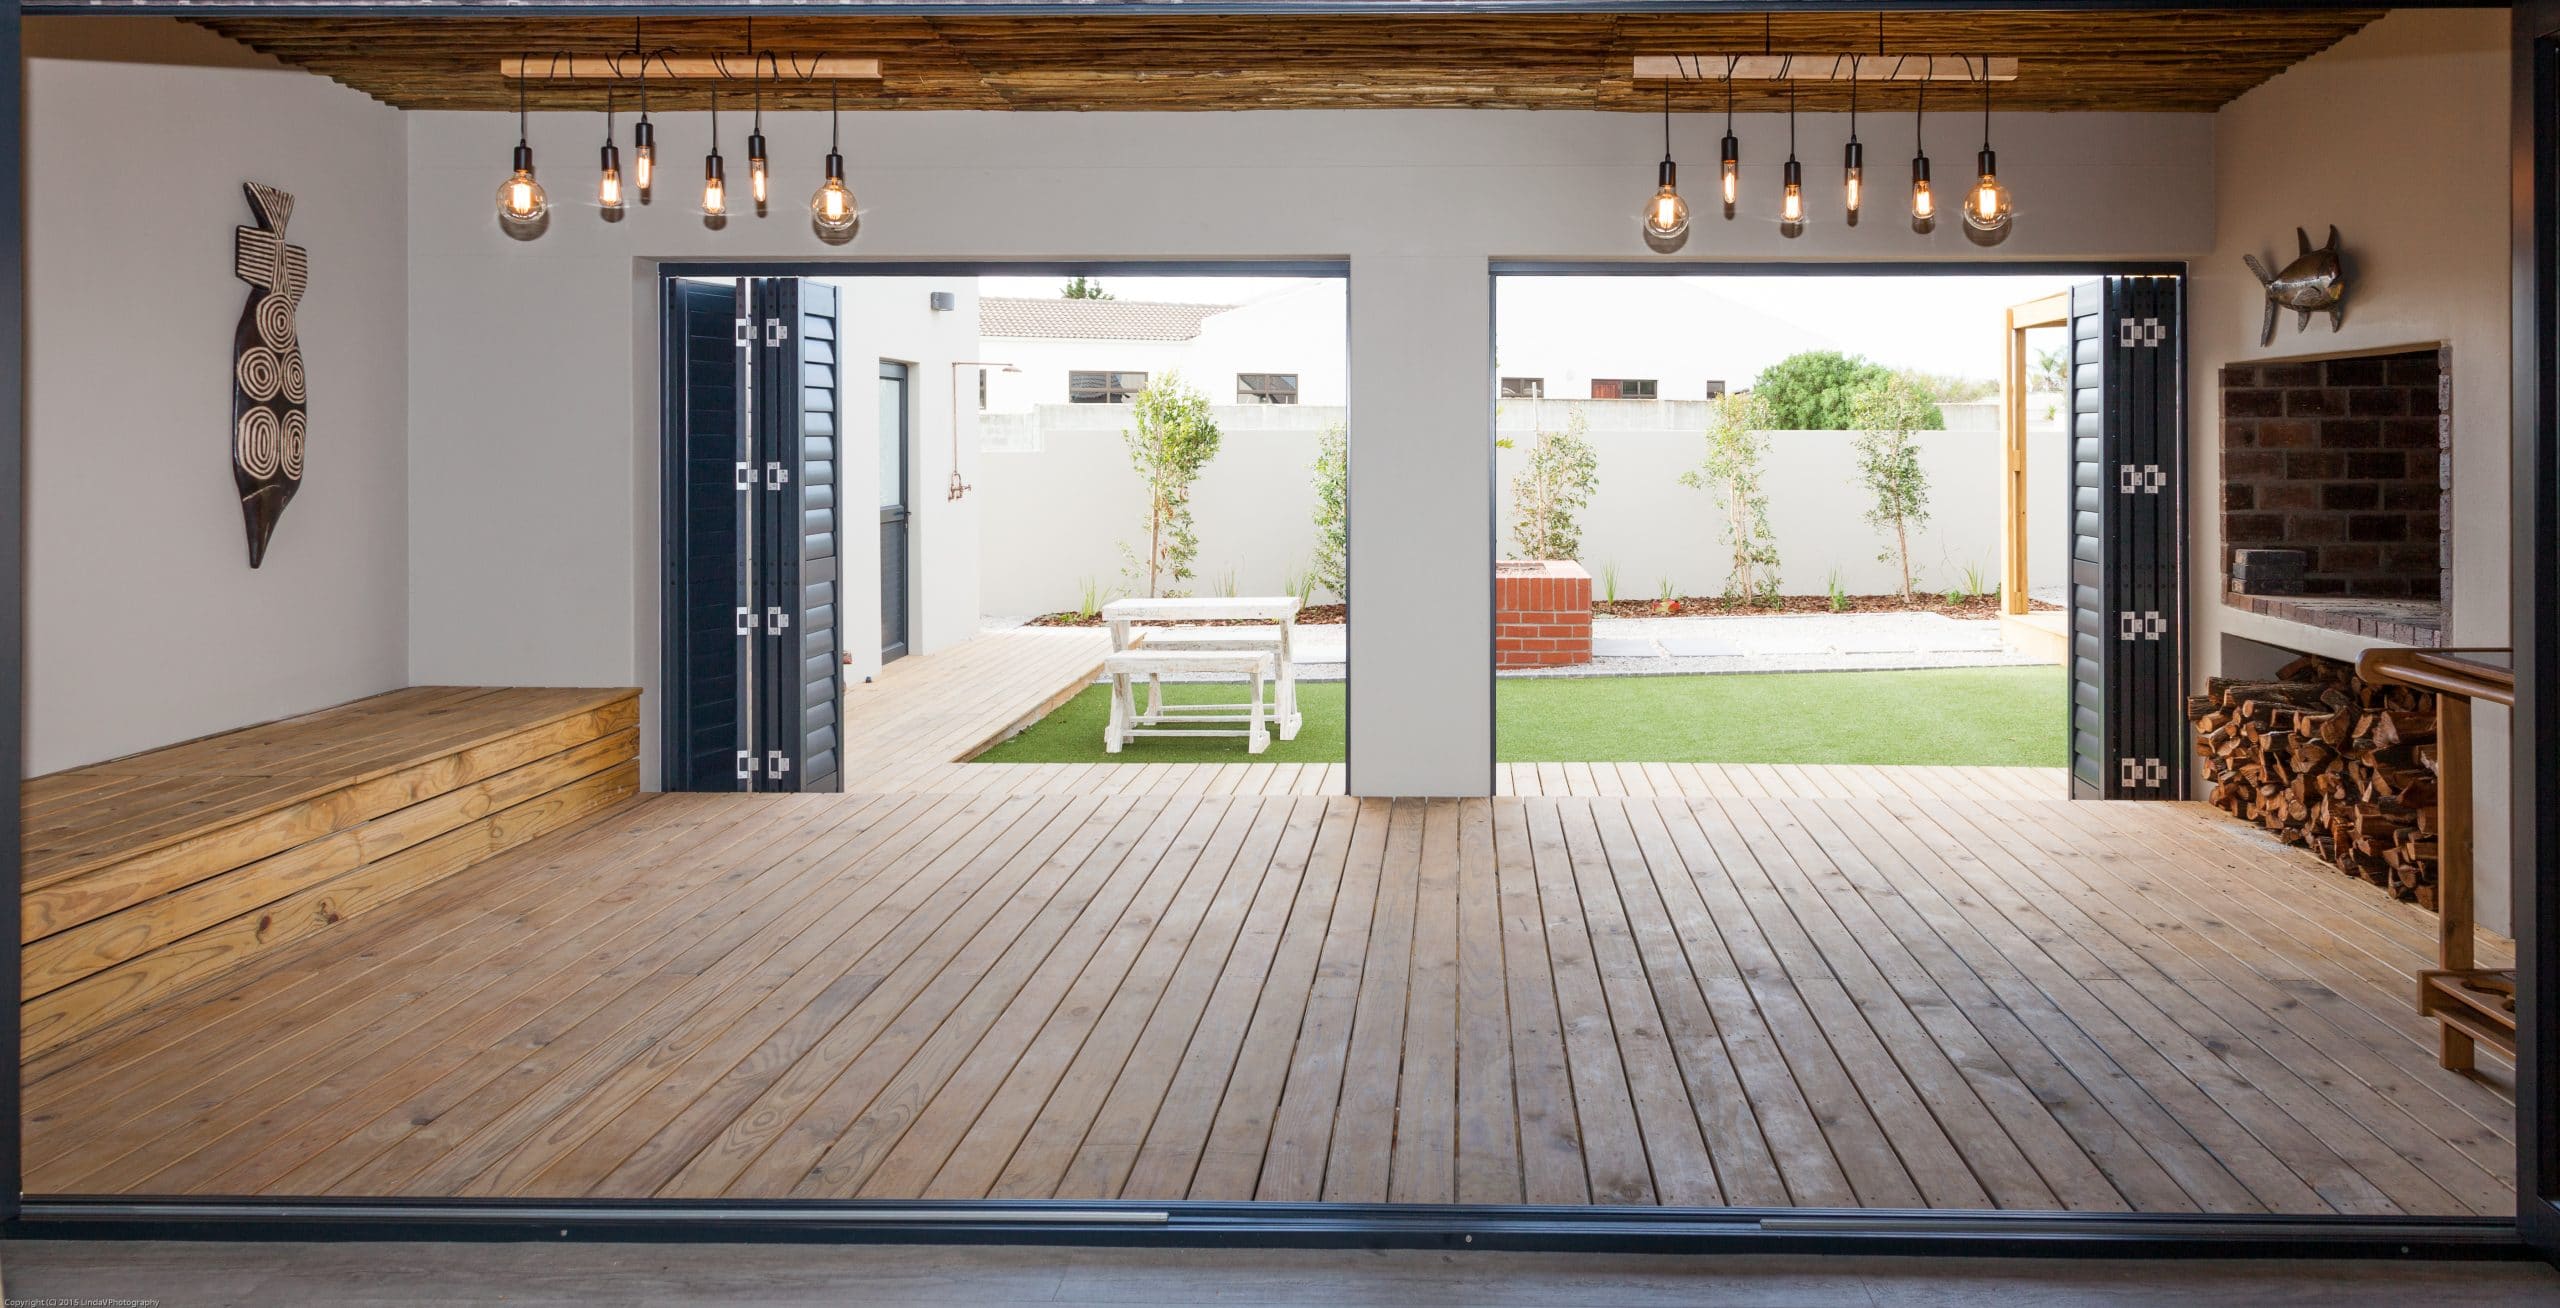 wooden timber decking enclosed patio braai area towards garden